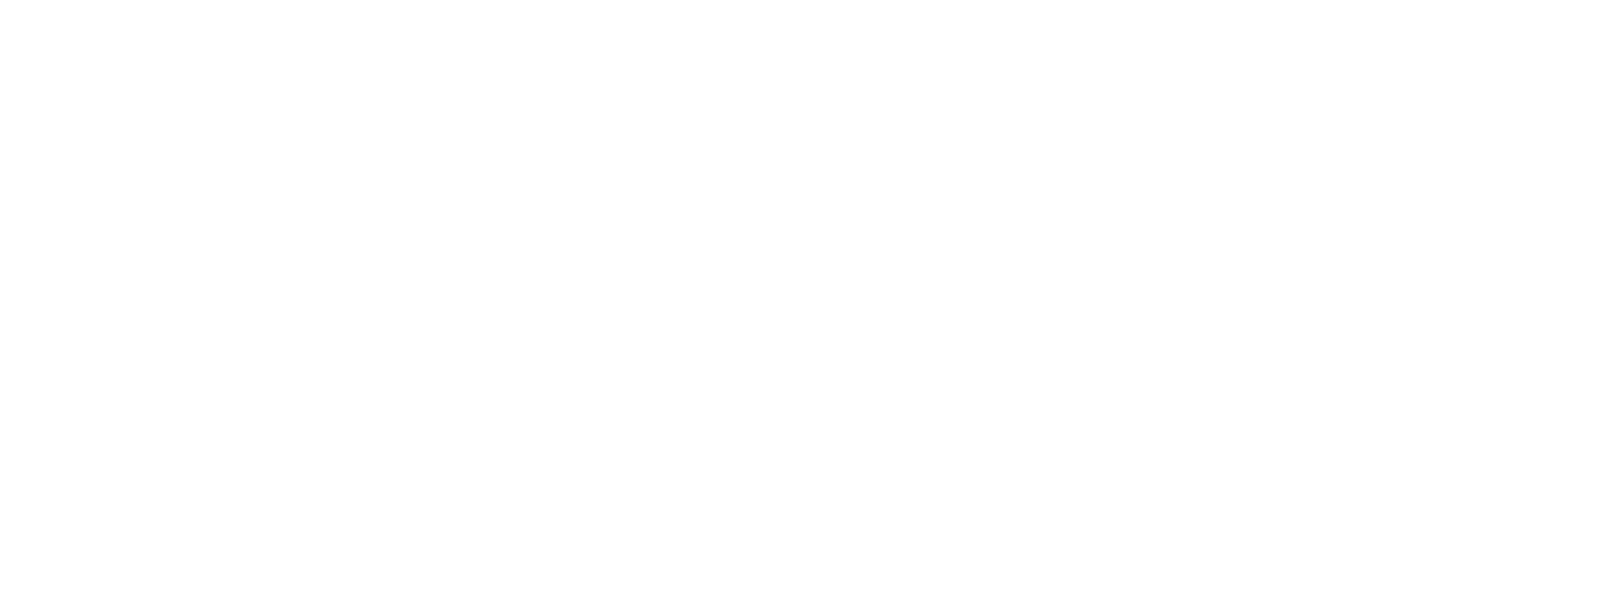 Chubby Got Guts logo